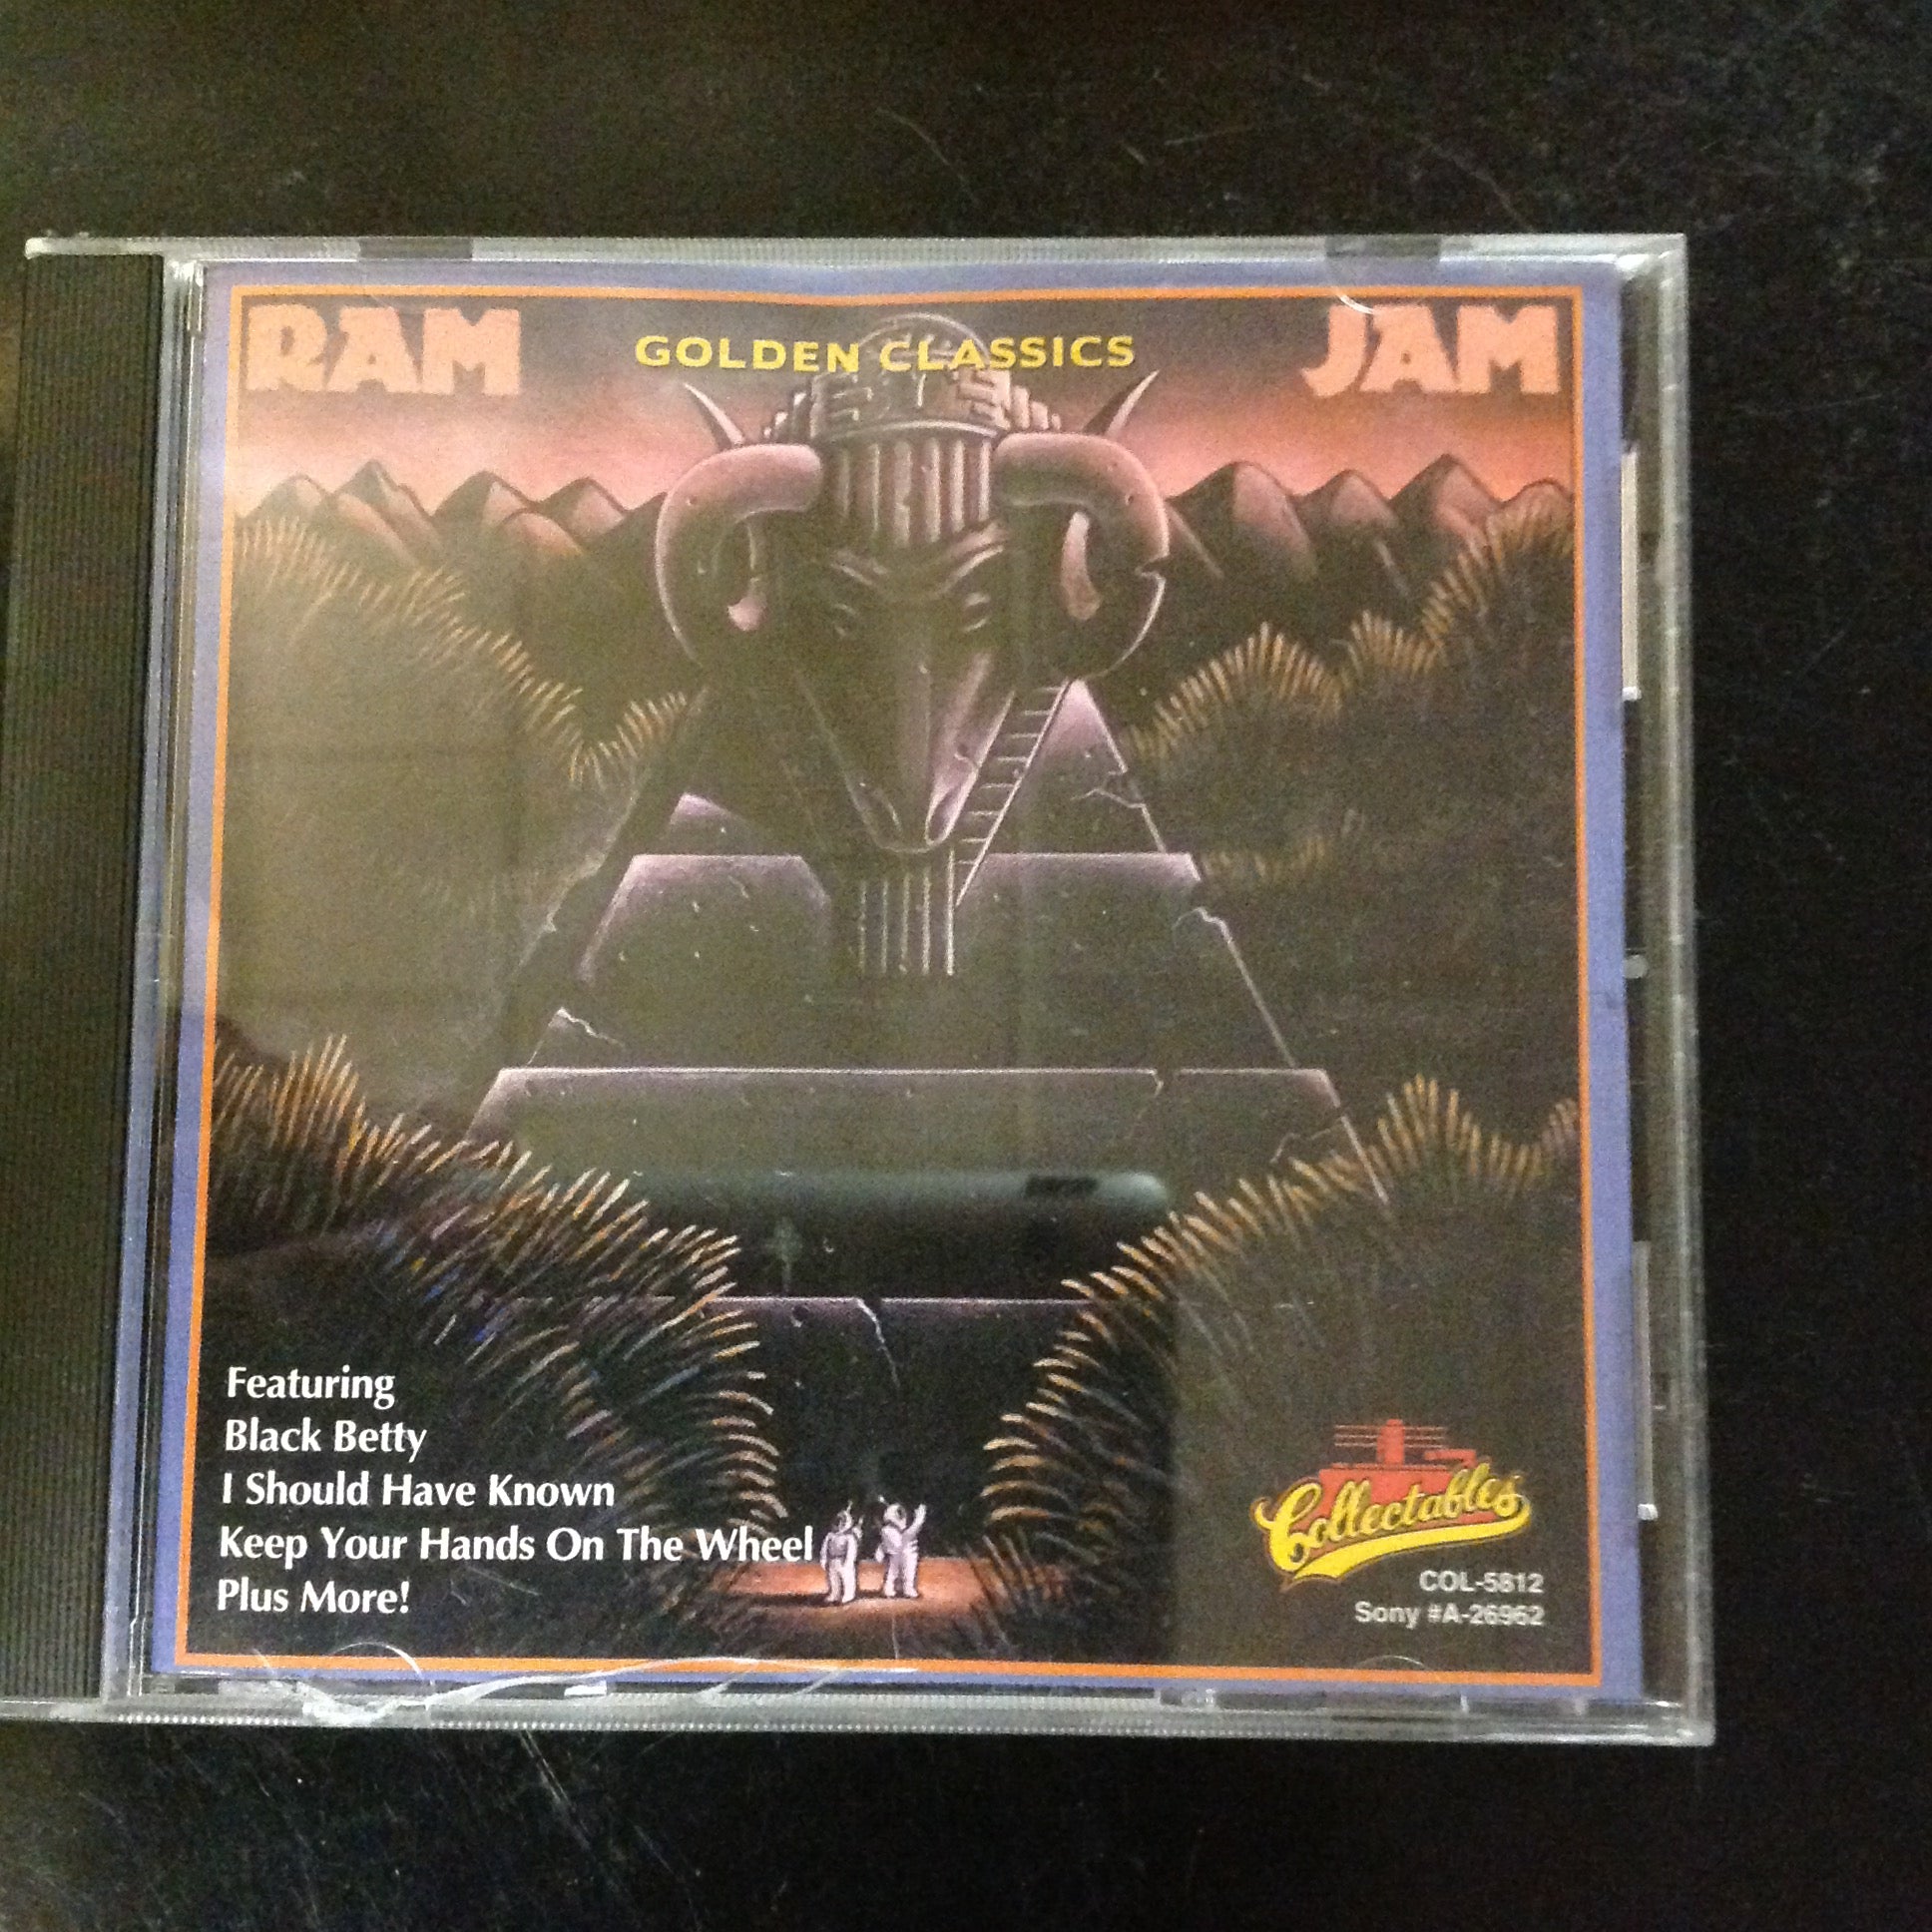 CD Ram Jam GOlden Classics ft. Black Betty COL-5812 Sony #A-26962